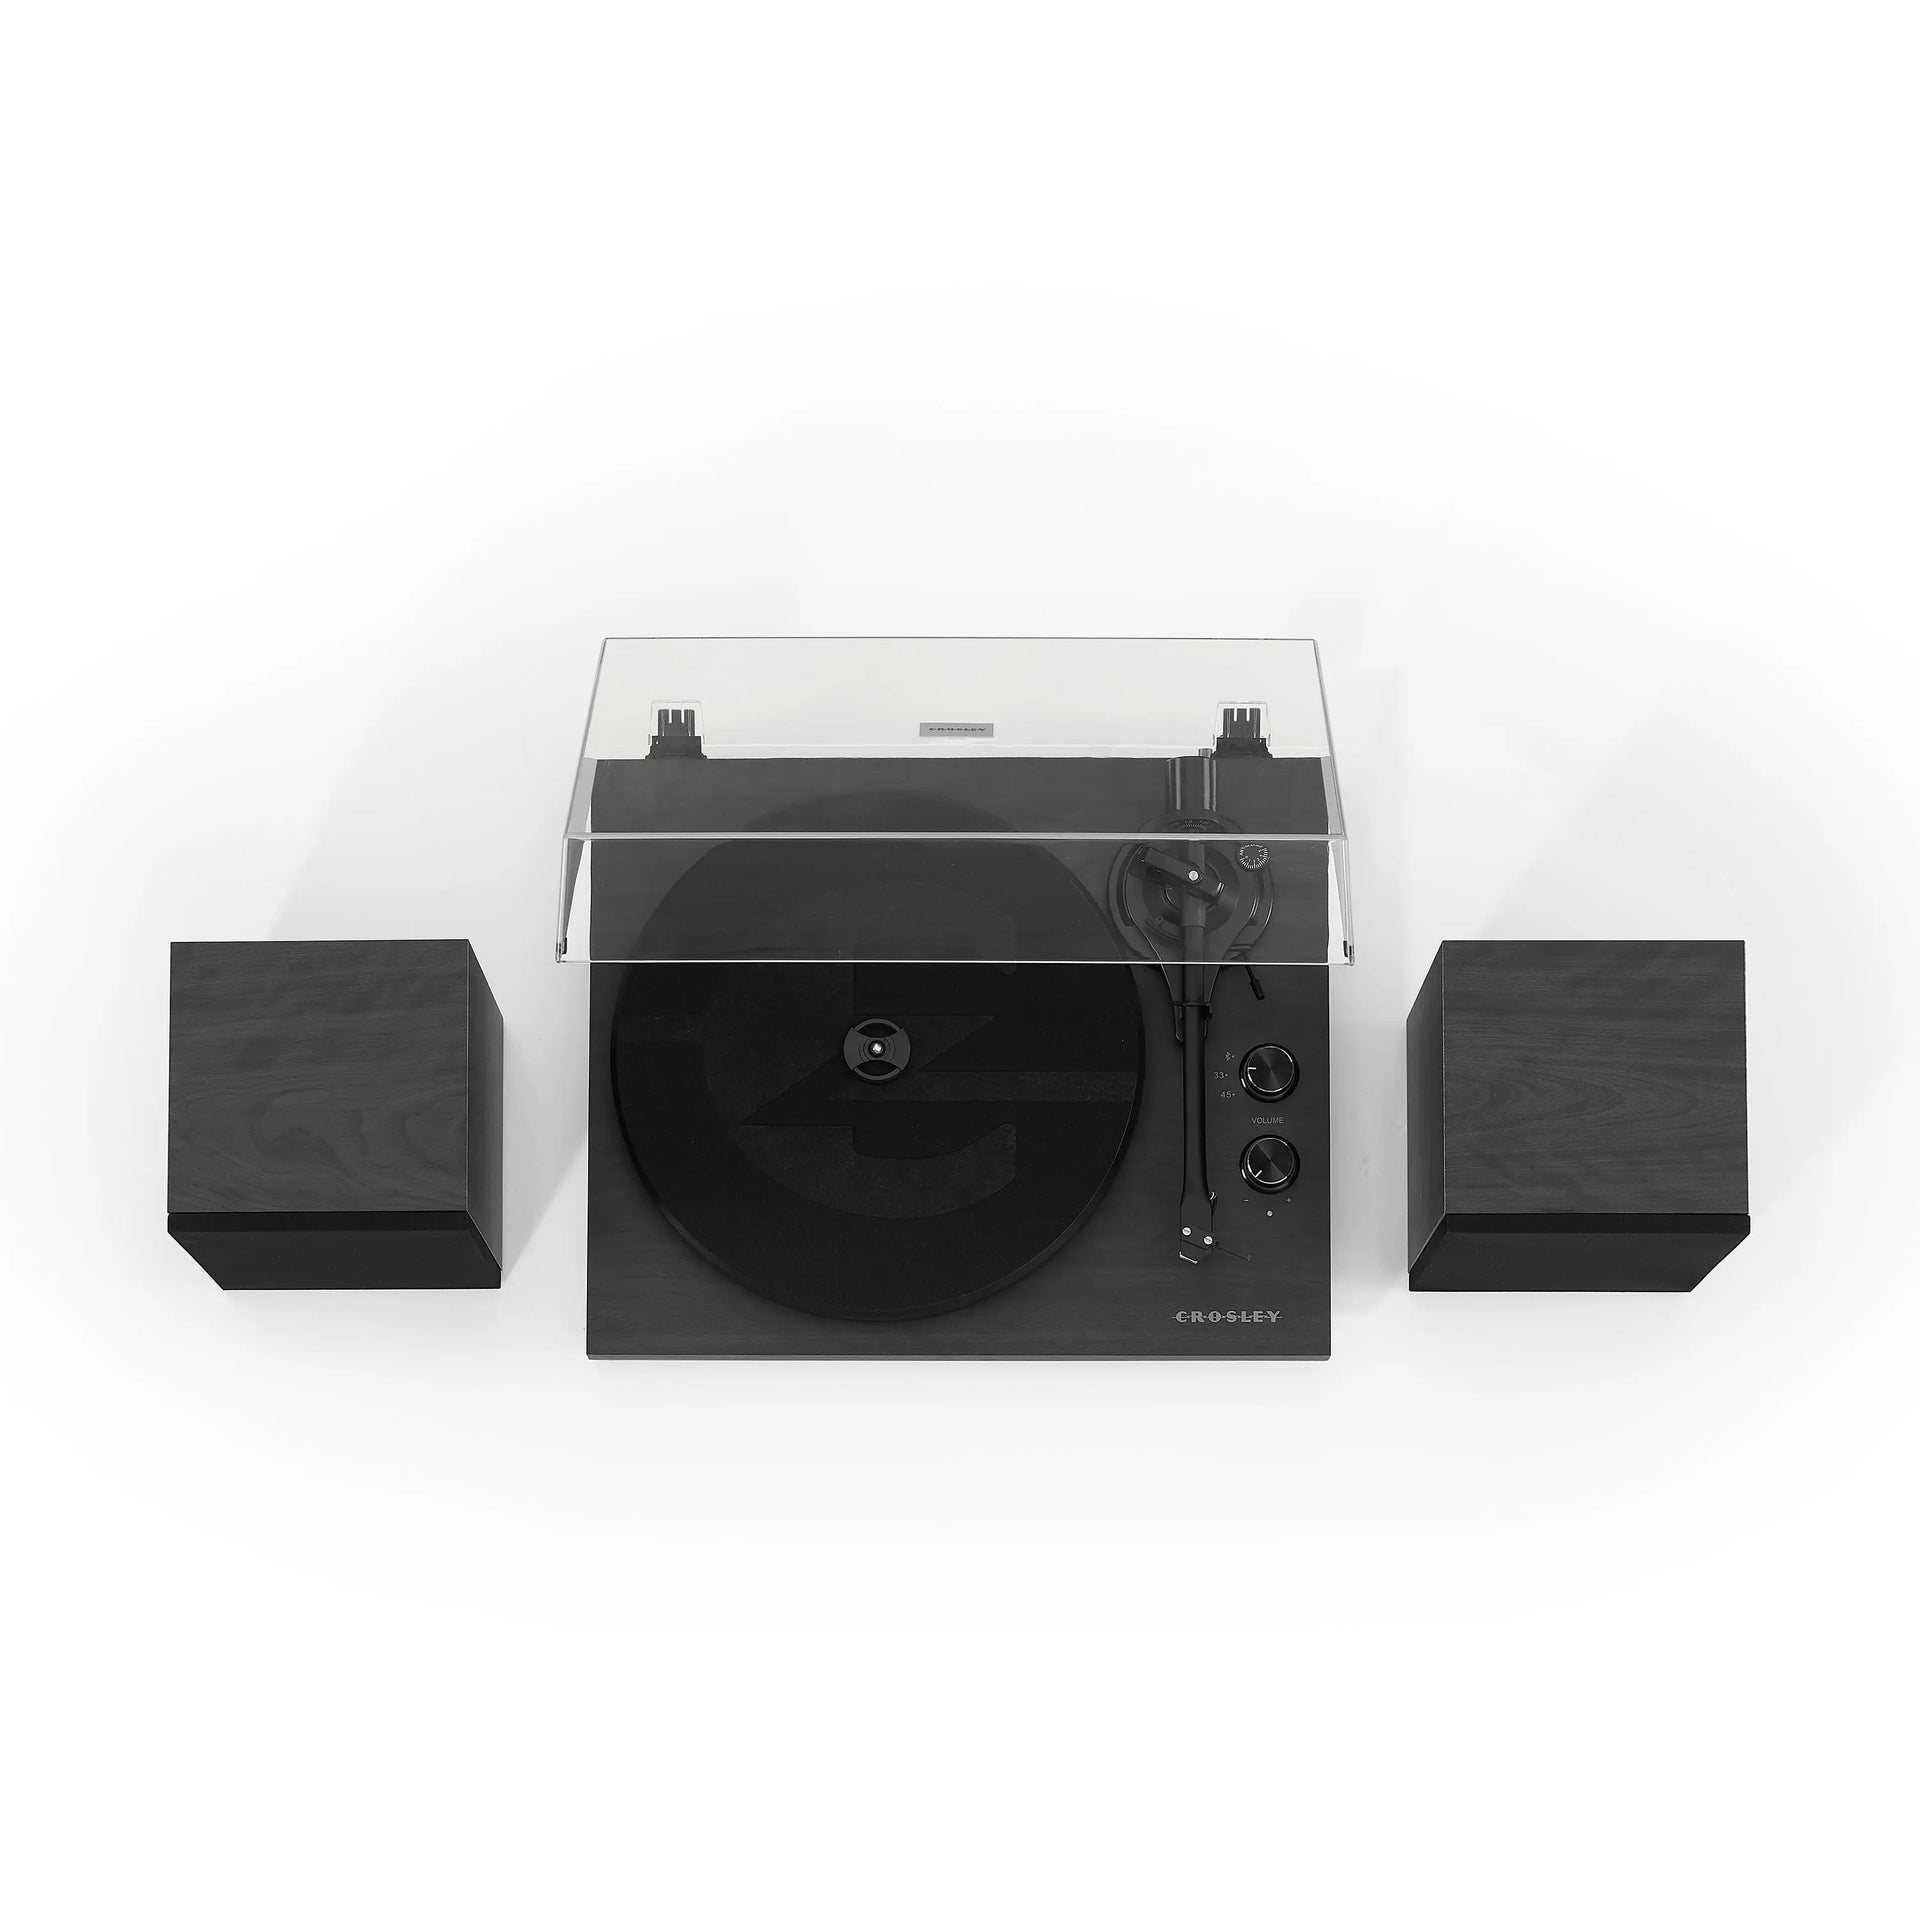 C62 Bluetooth record player with external speakers - C62C-BK4 | Black Crosley Radio Europe